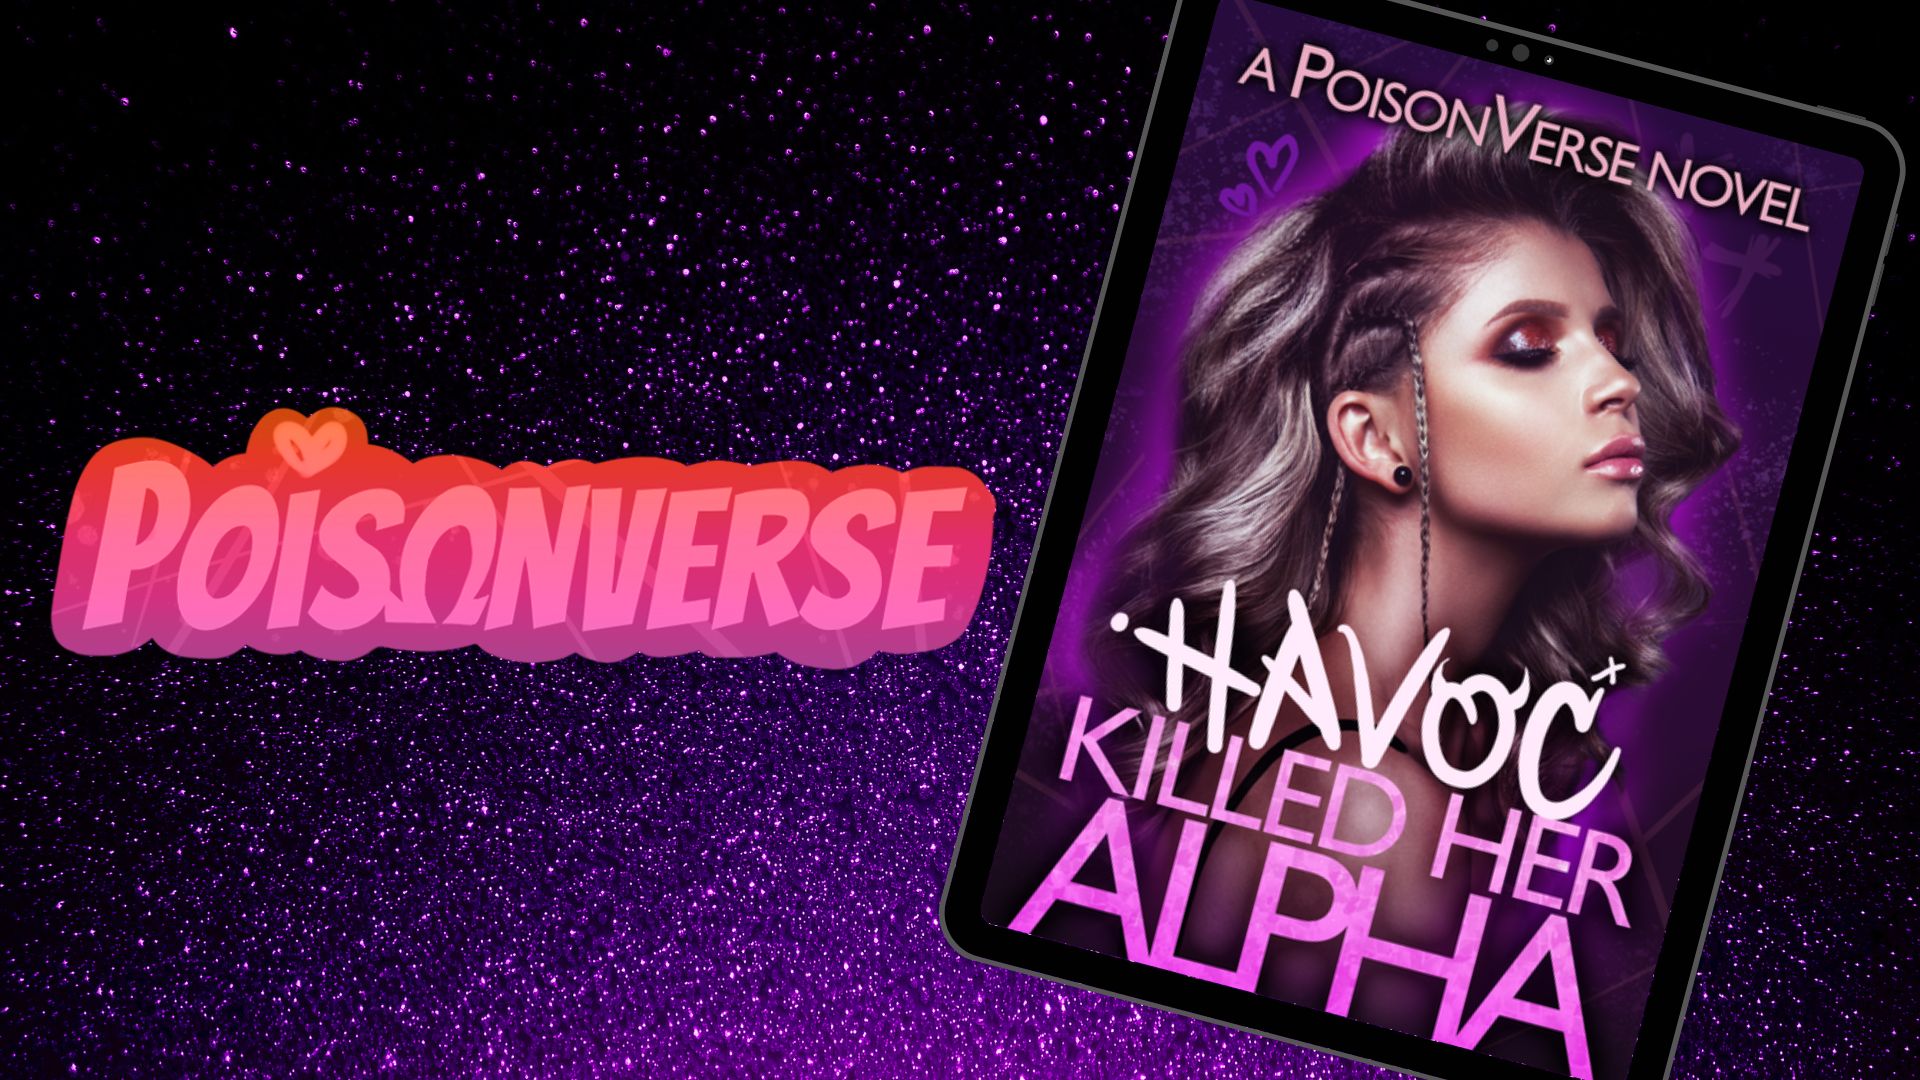 PoisonVerse - Havoc Killed her Alpha